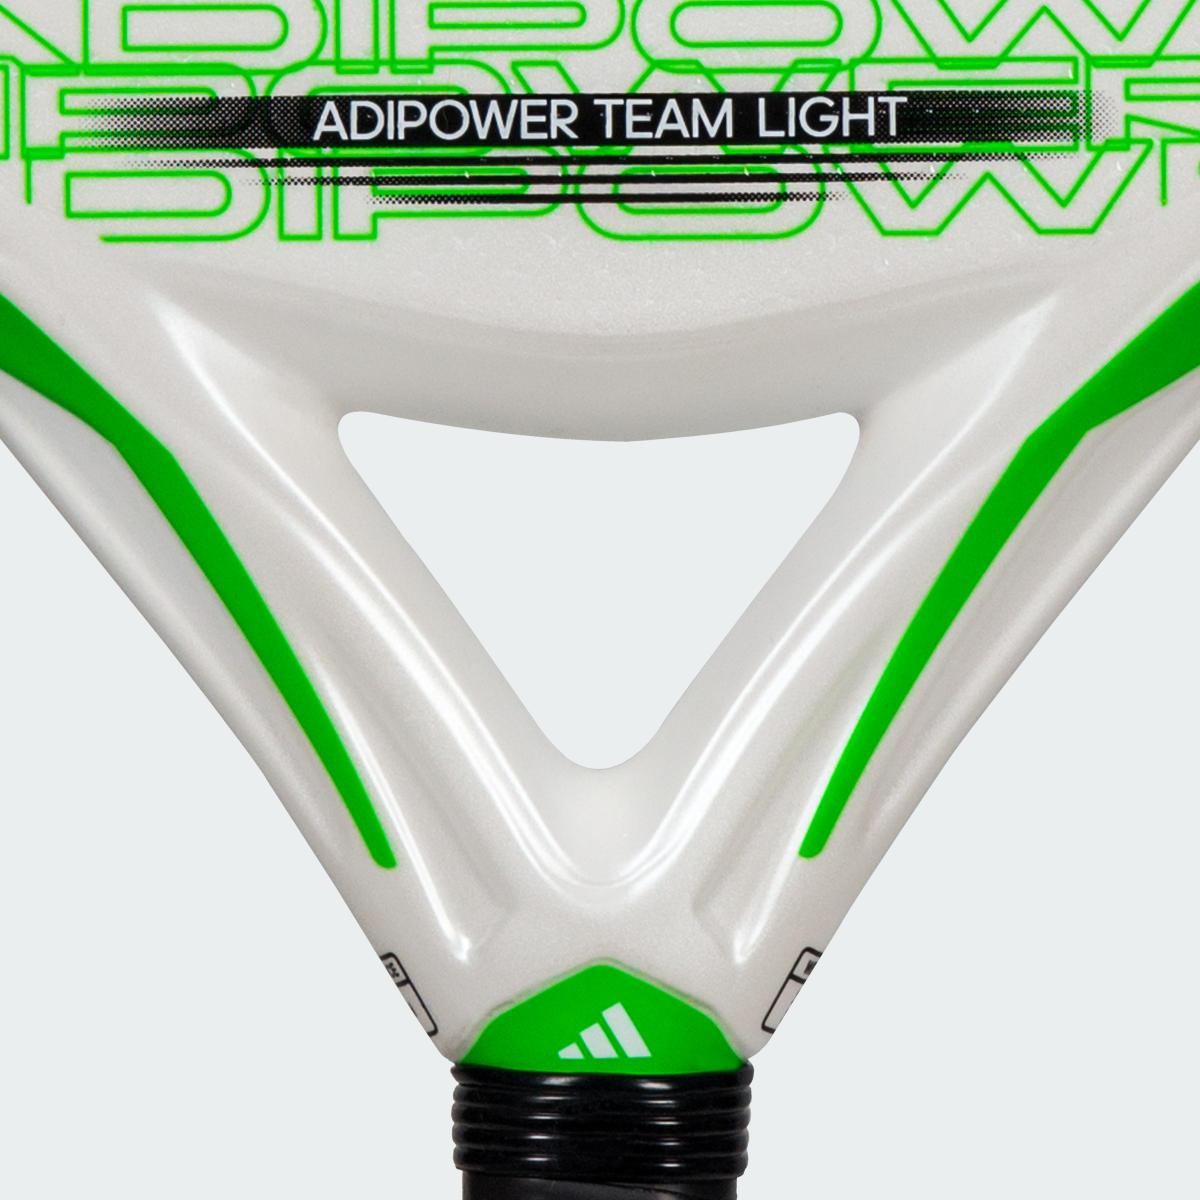 Adidas Adipower Team Light 3.3 Padel-Schläger. 5